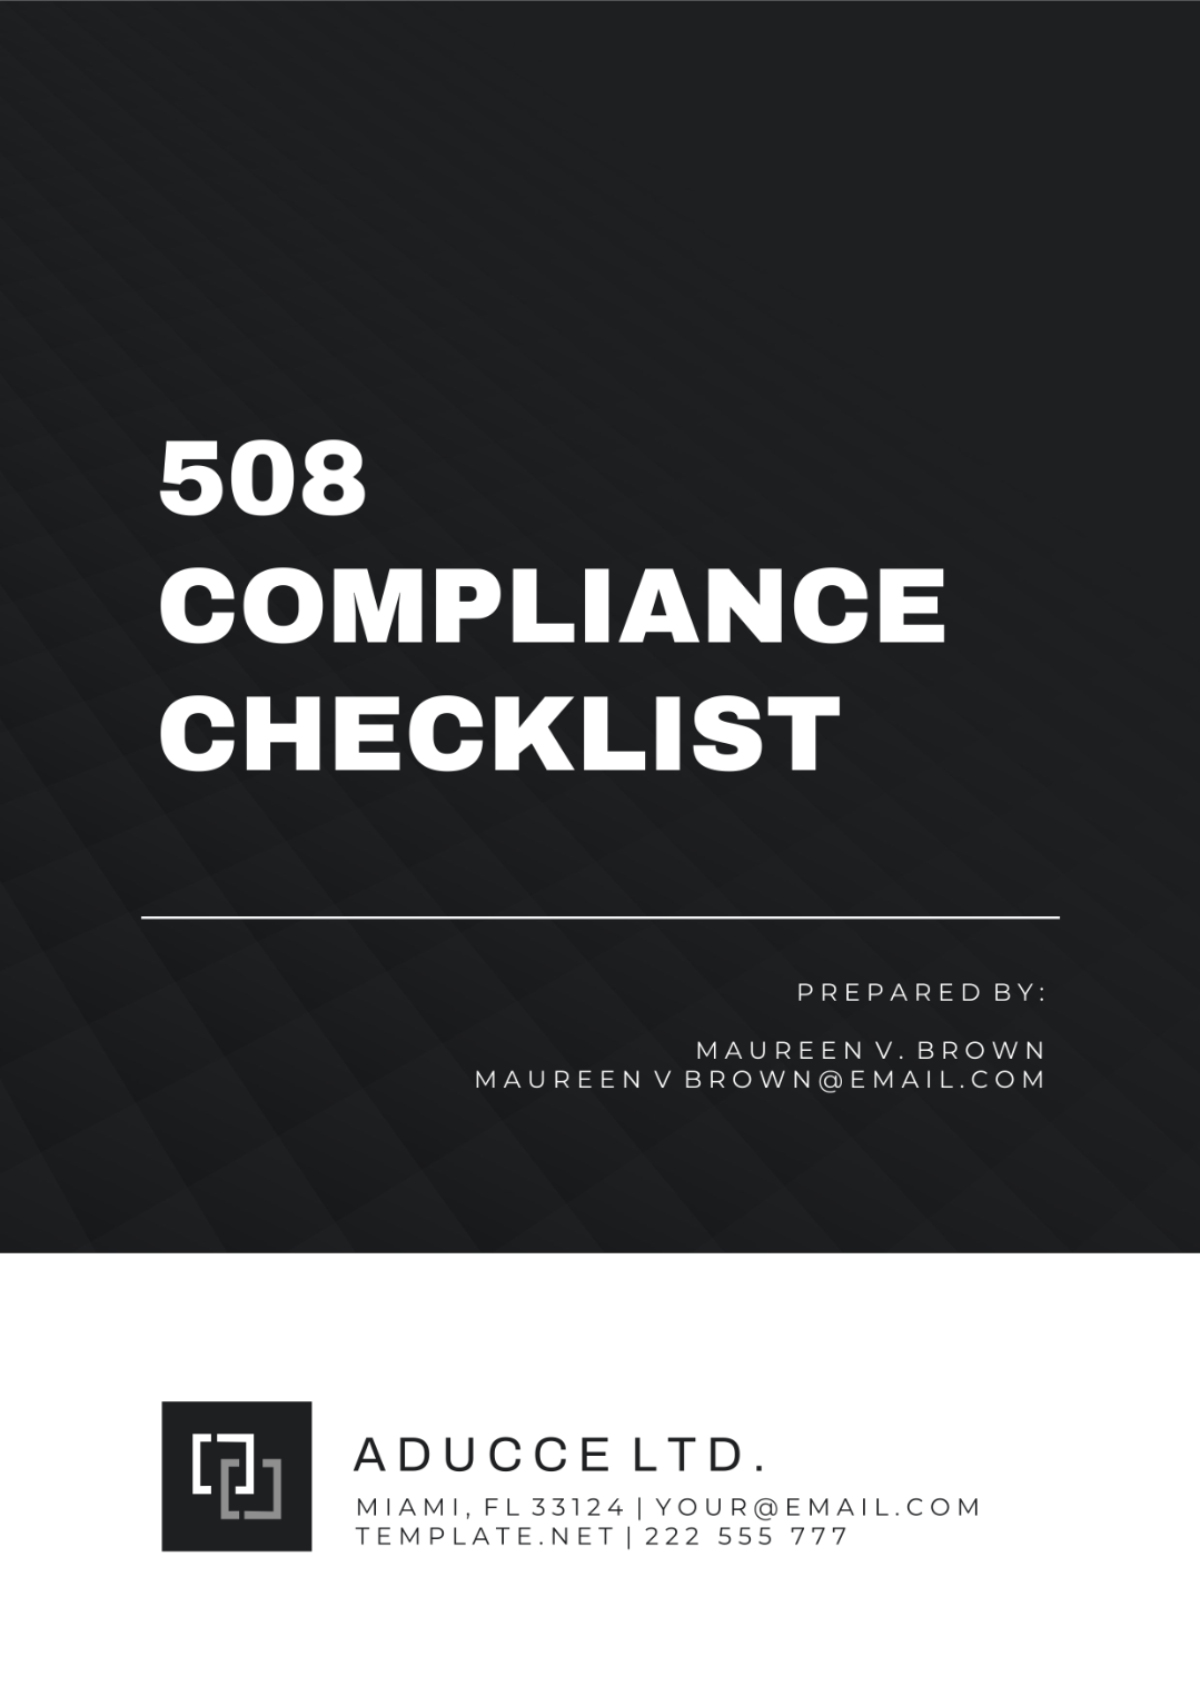 508 Compliance Checklist Template